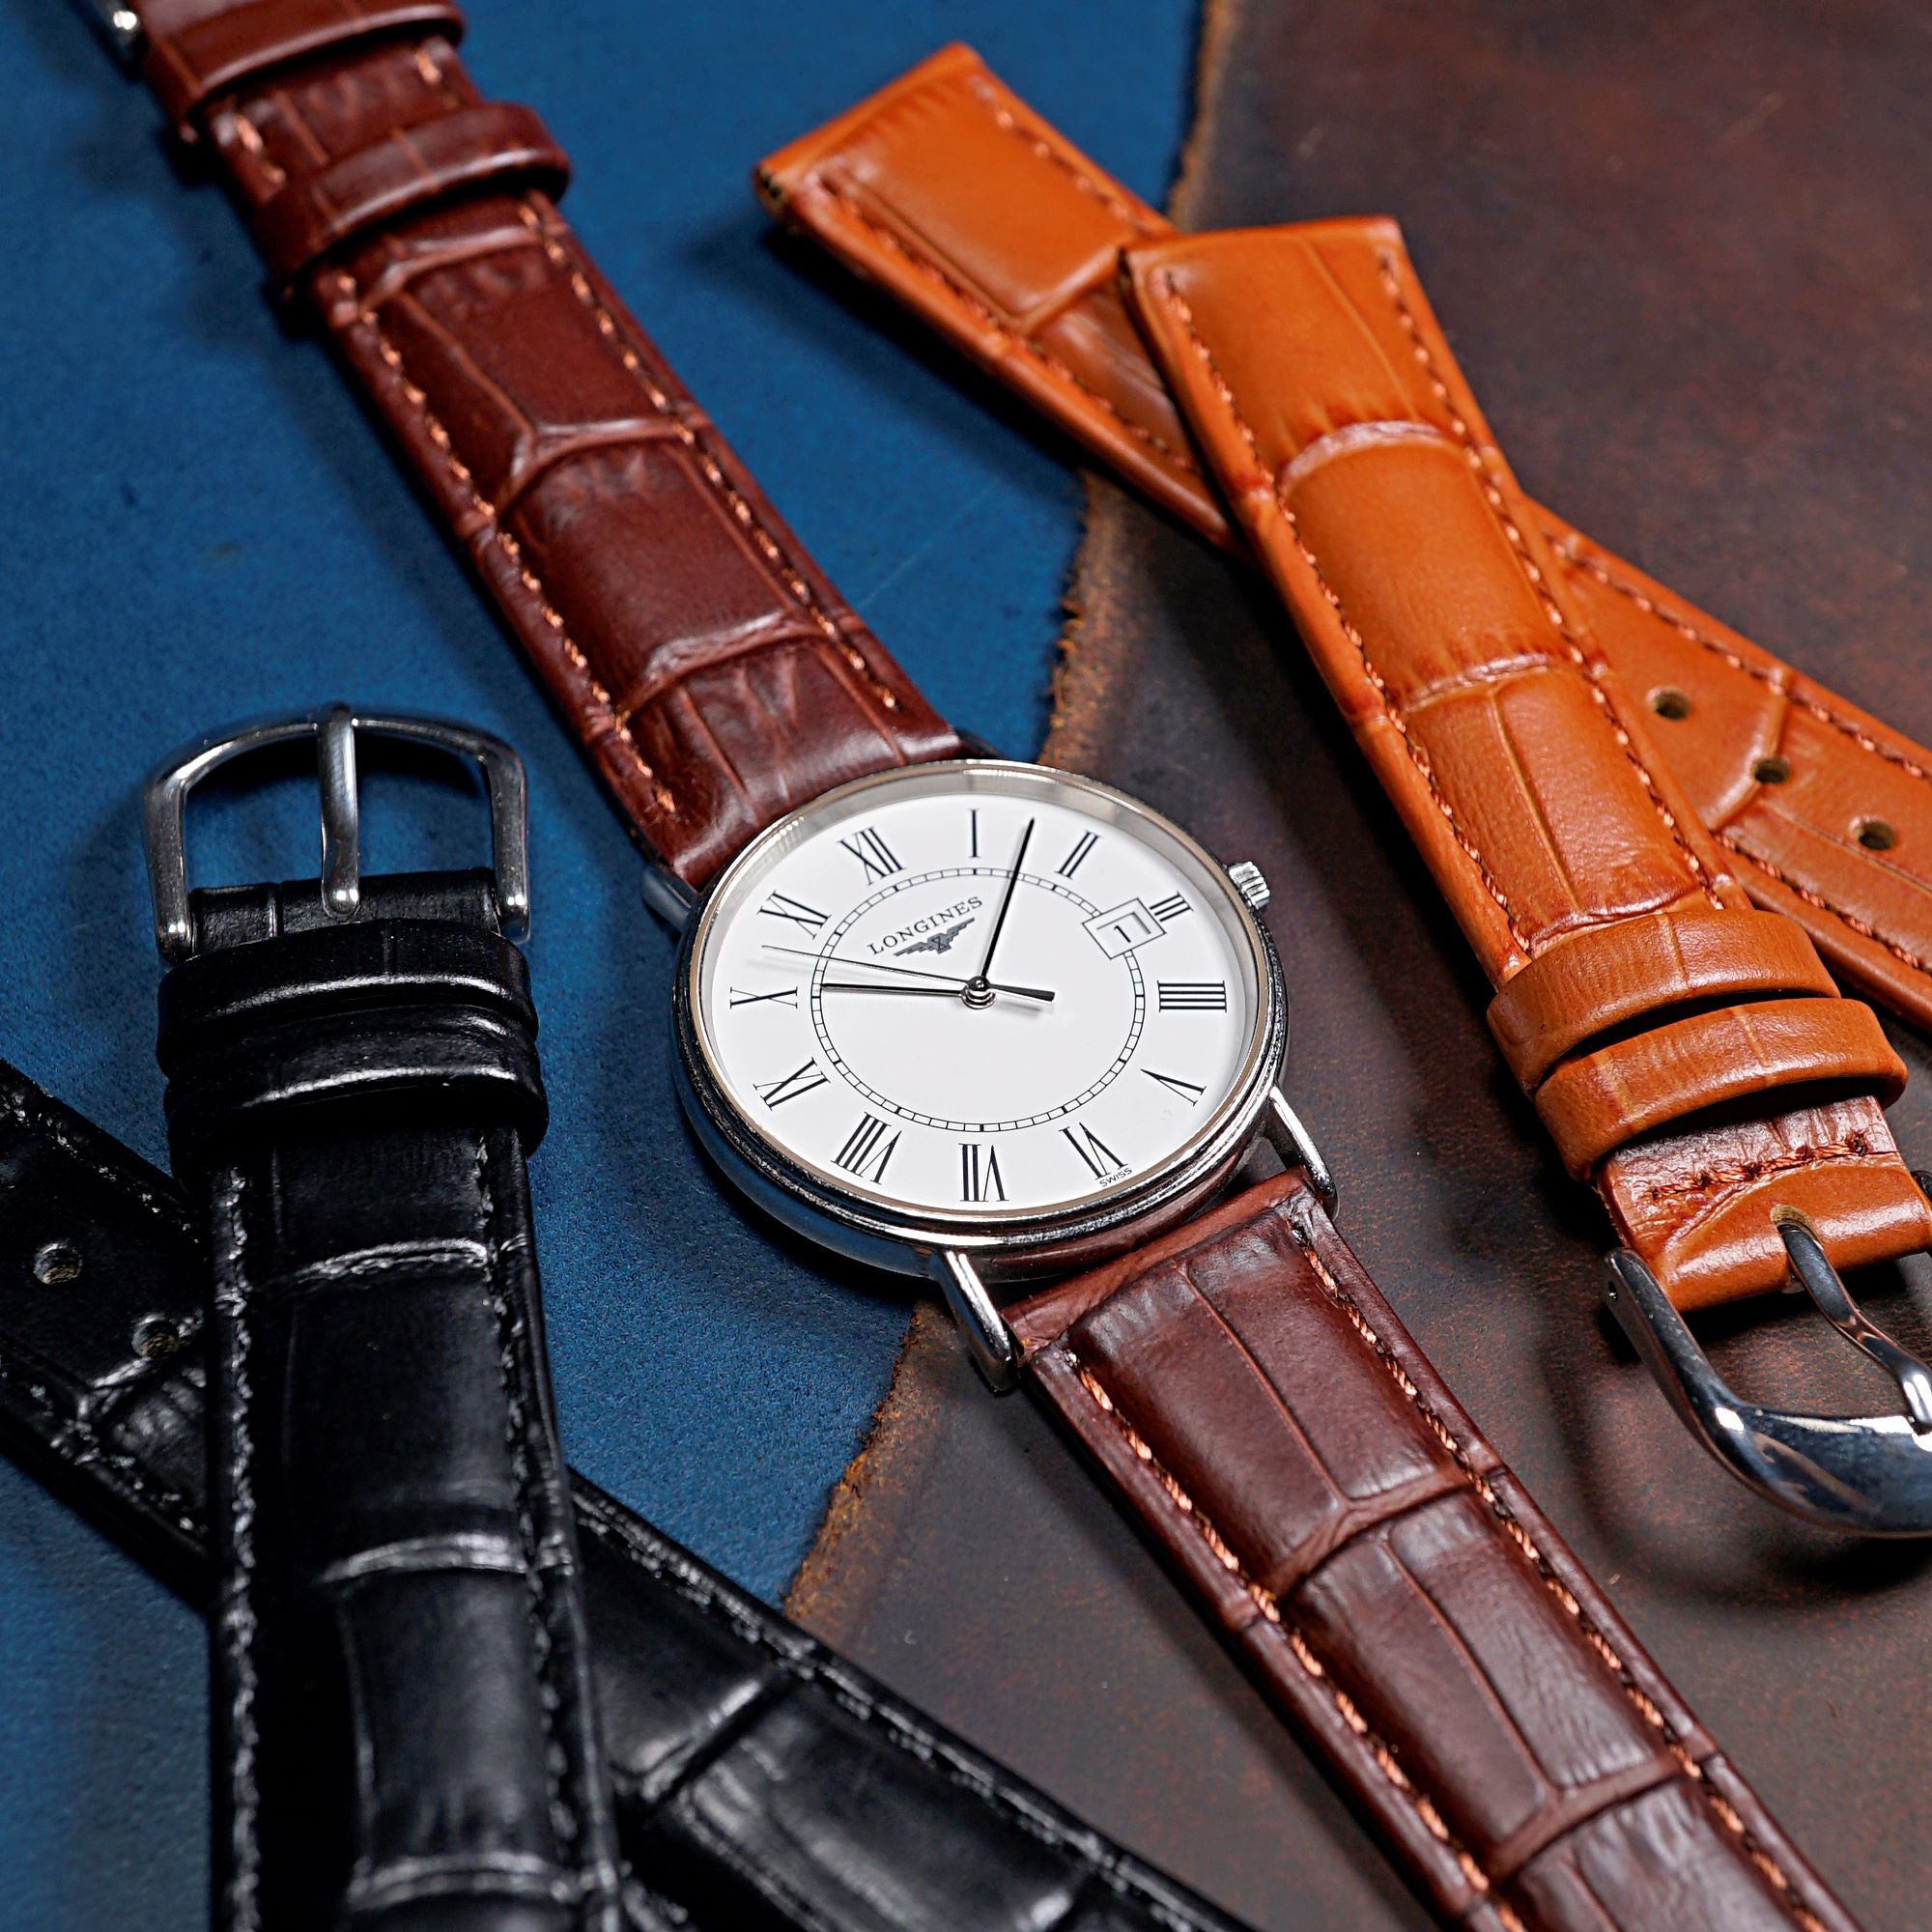 Genuine Croc Pattern Stitched Leather Watch Strap in Brown - Nomad Watch Works MY